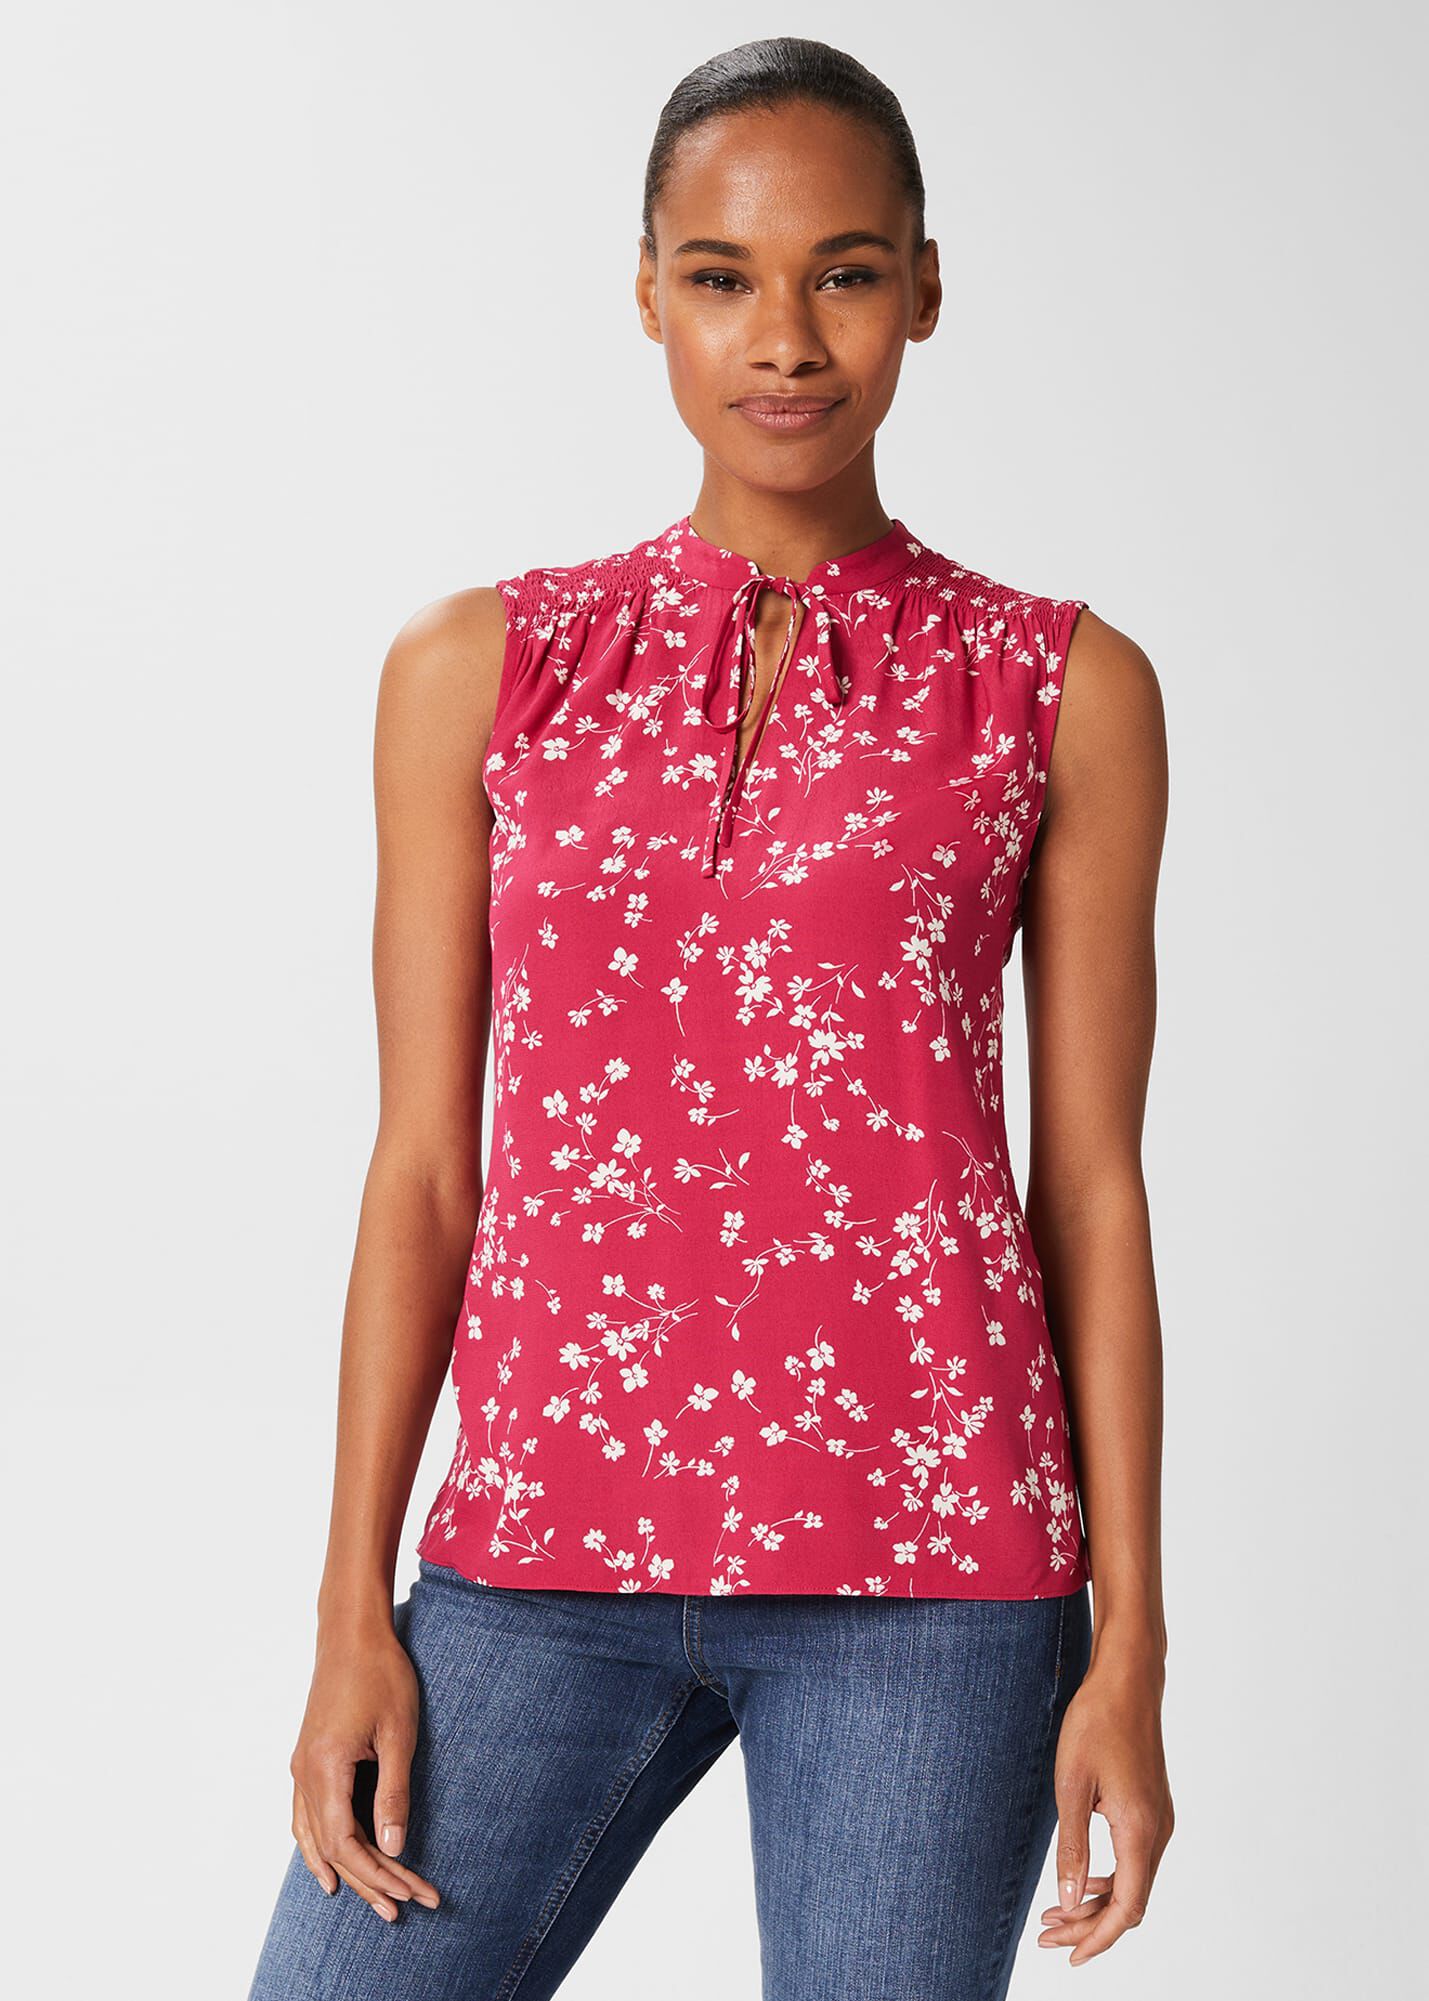 NoName blouse WOMEN FASHION Shirts & T-shirts Blouse Casual Pink S discount 63% 